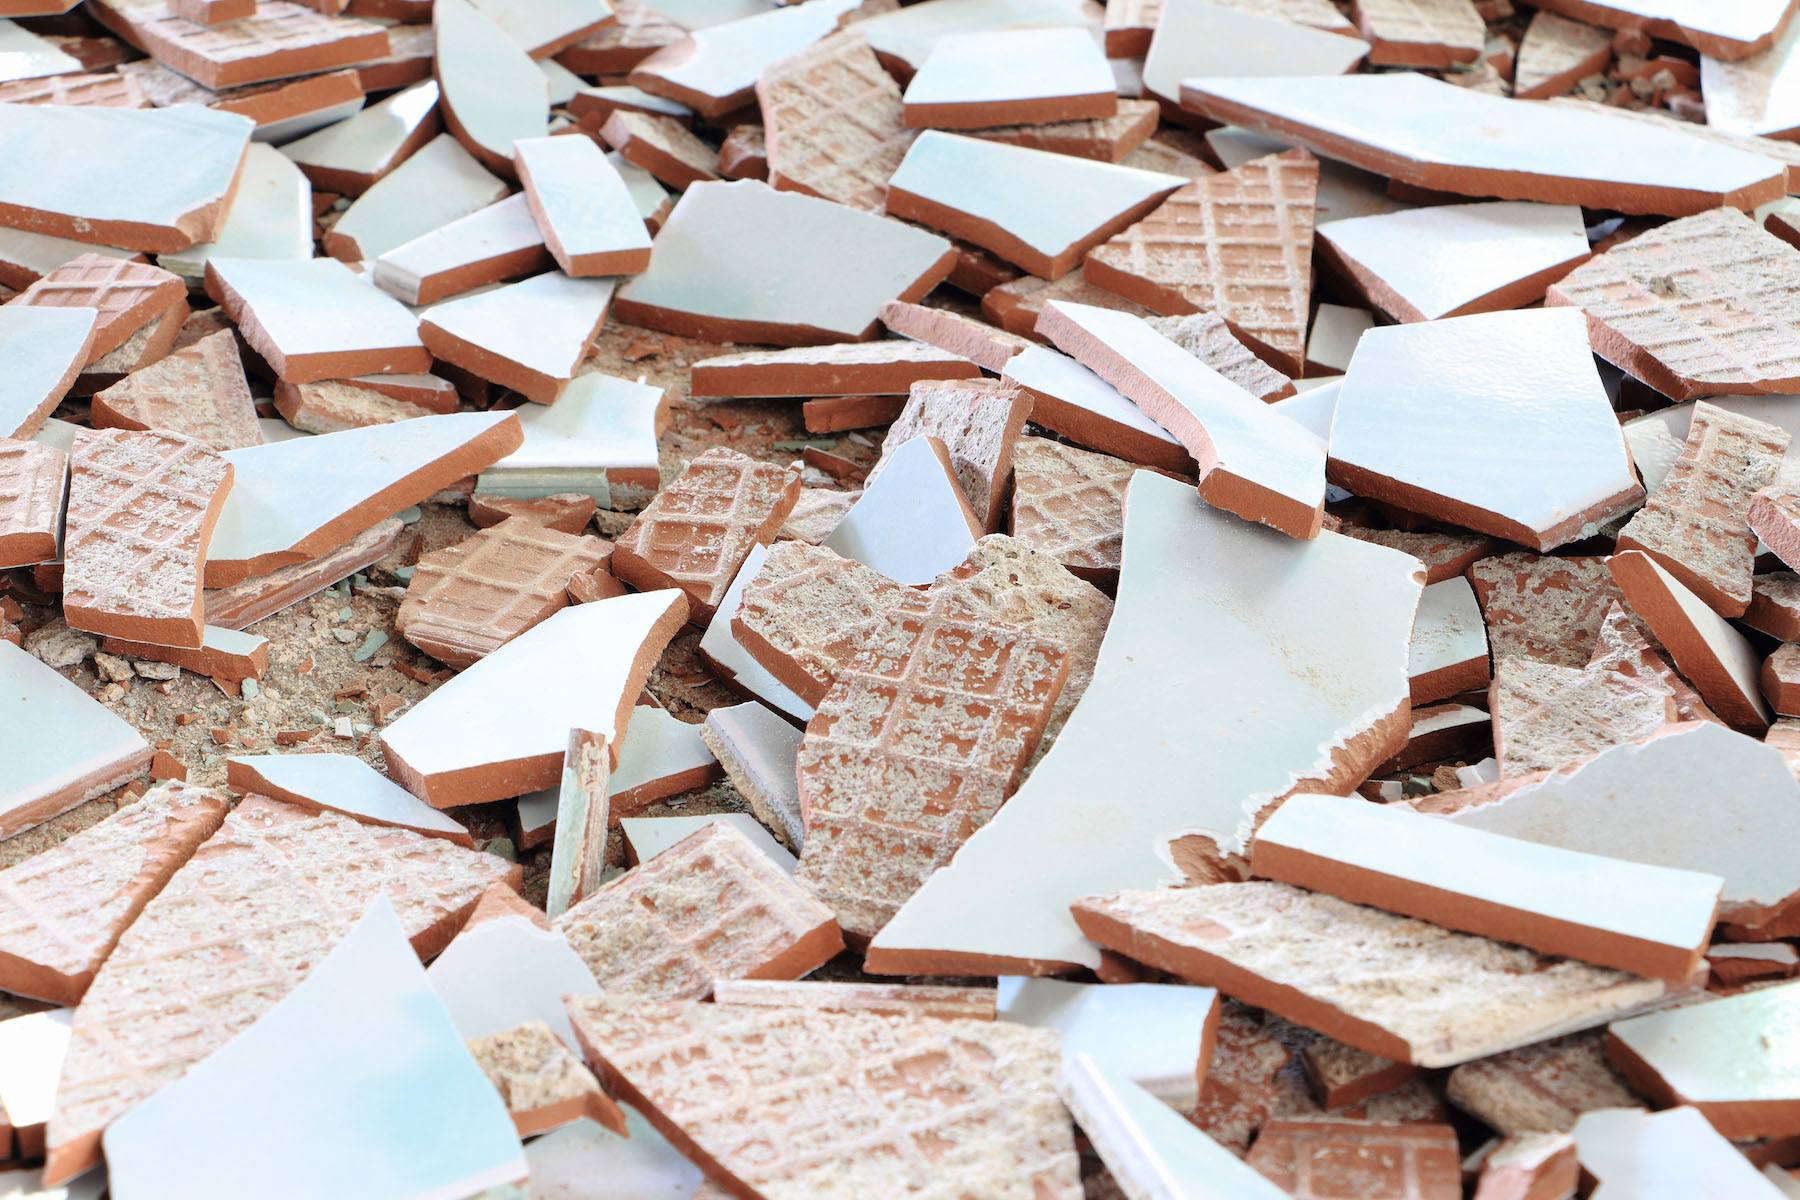 Scottsdale Dustless Tile Removal. Remove Ceramic Tile Safely